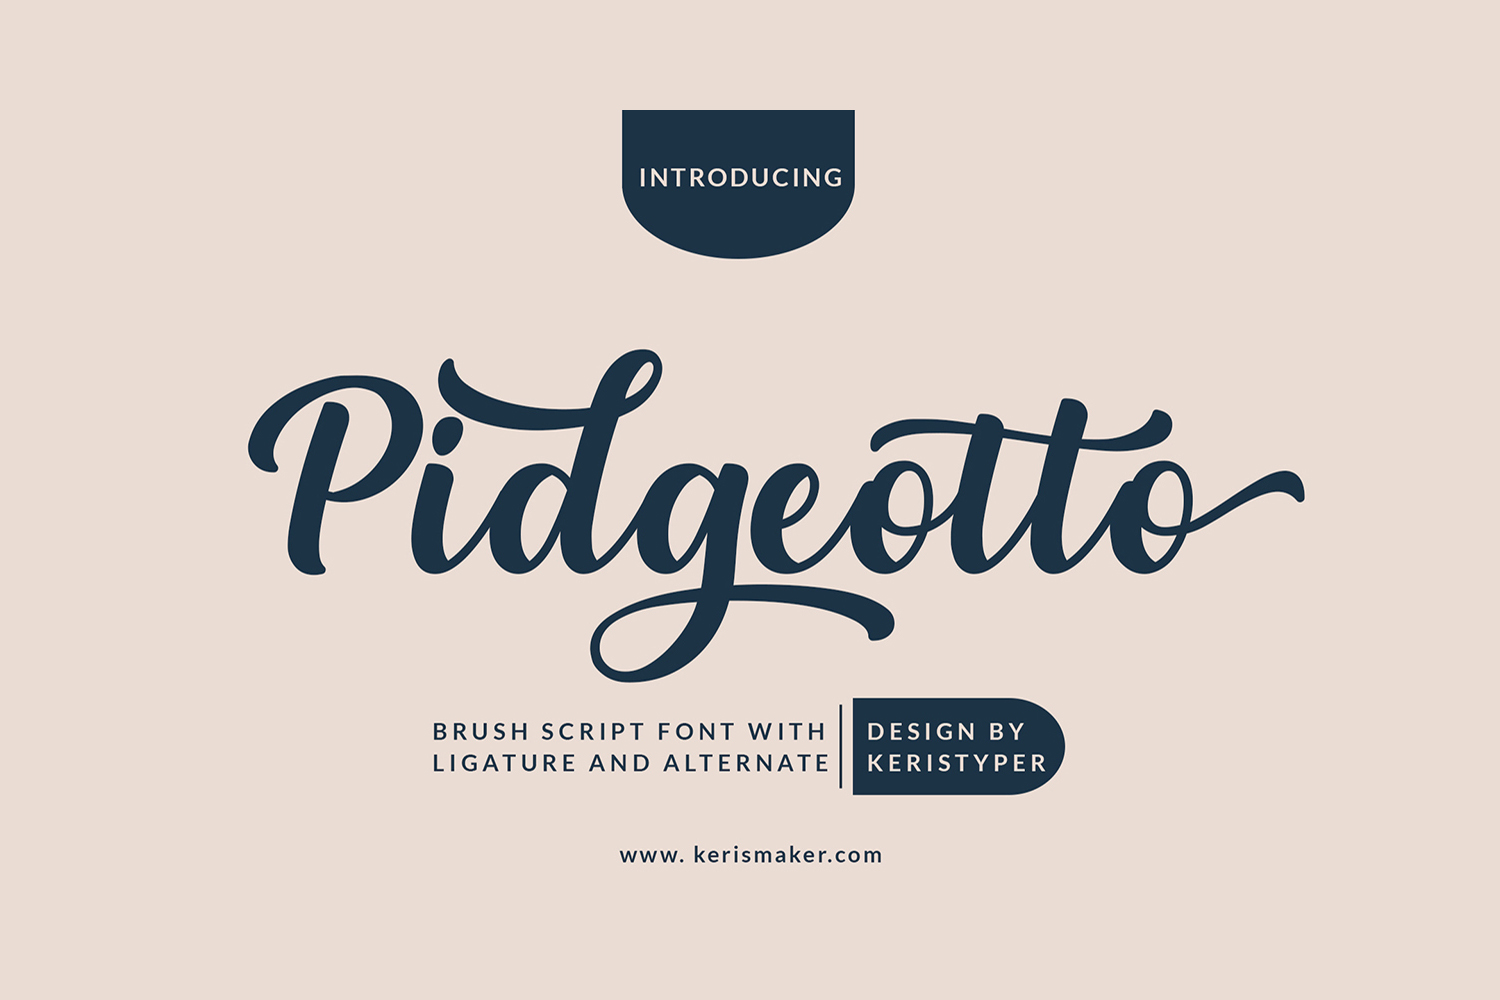 Pidgeotto Free Font